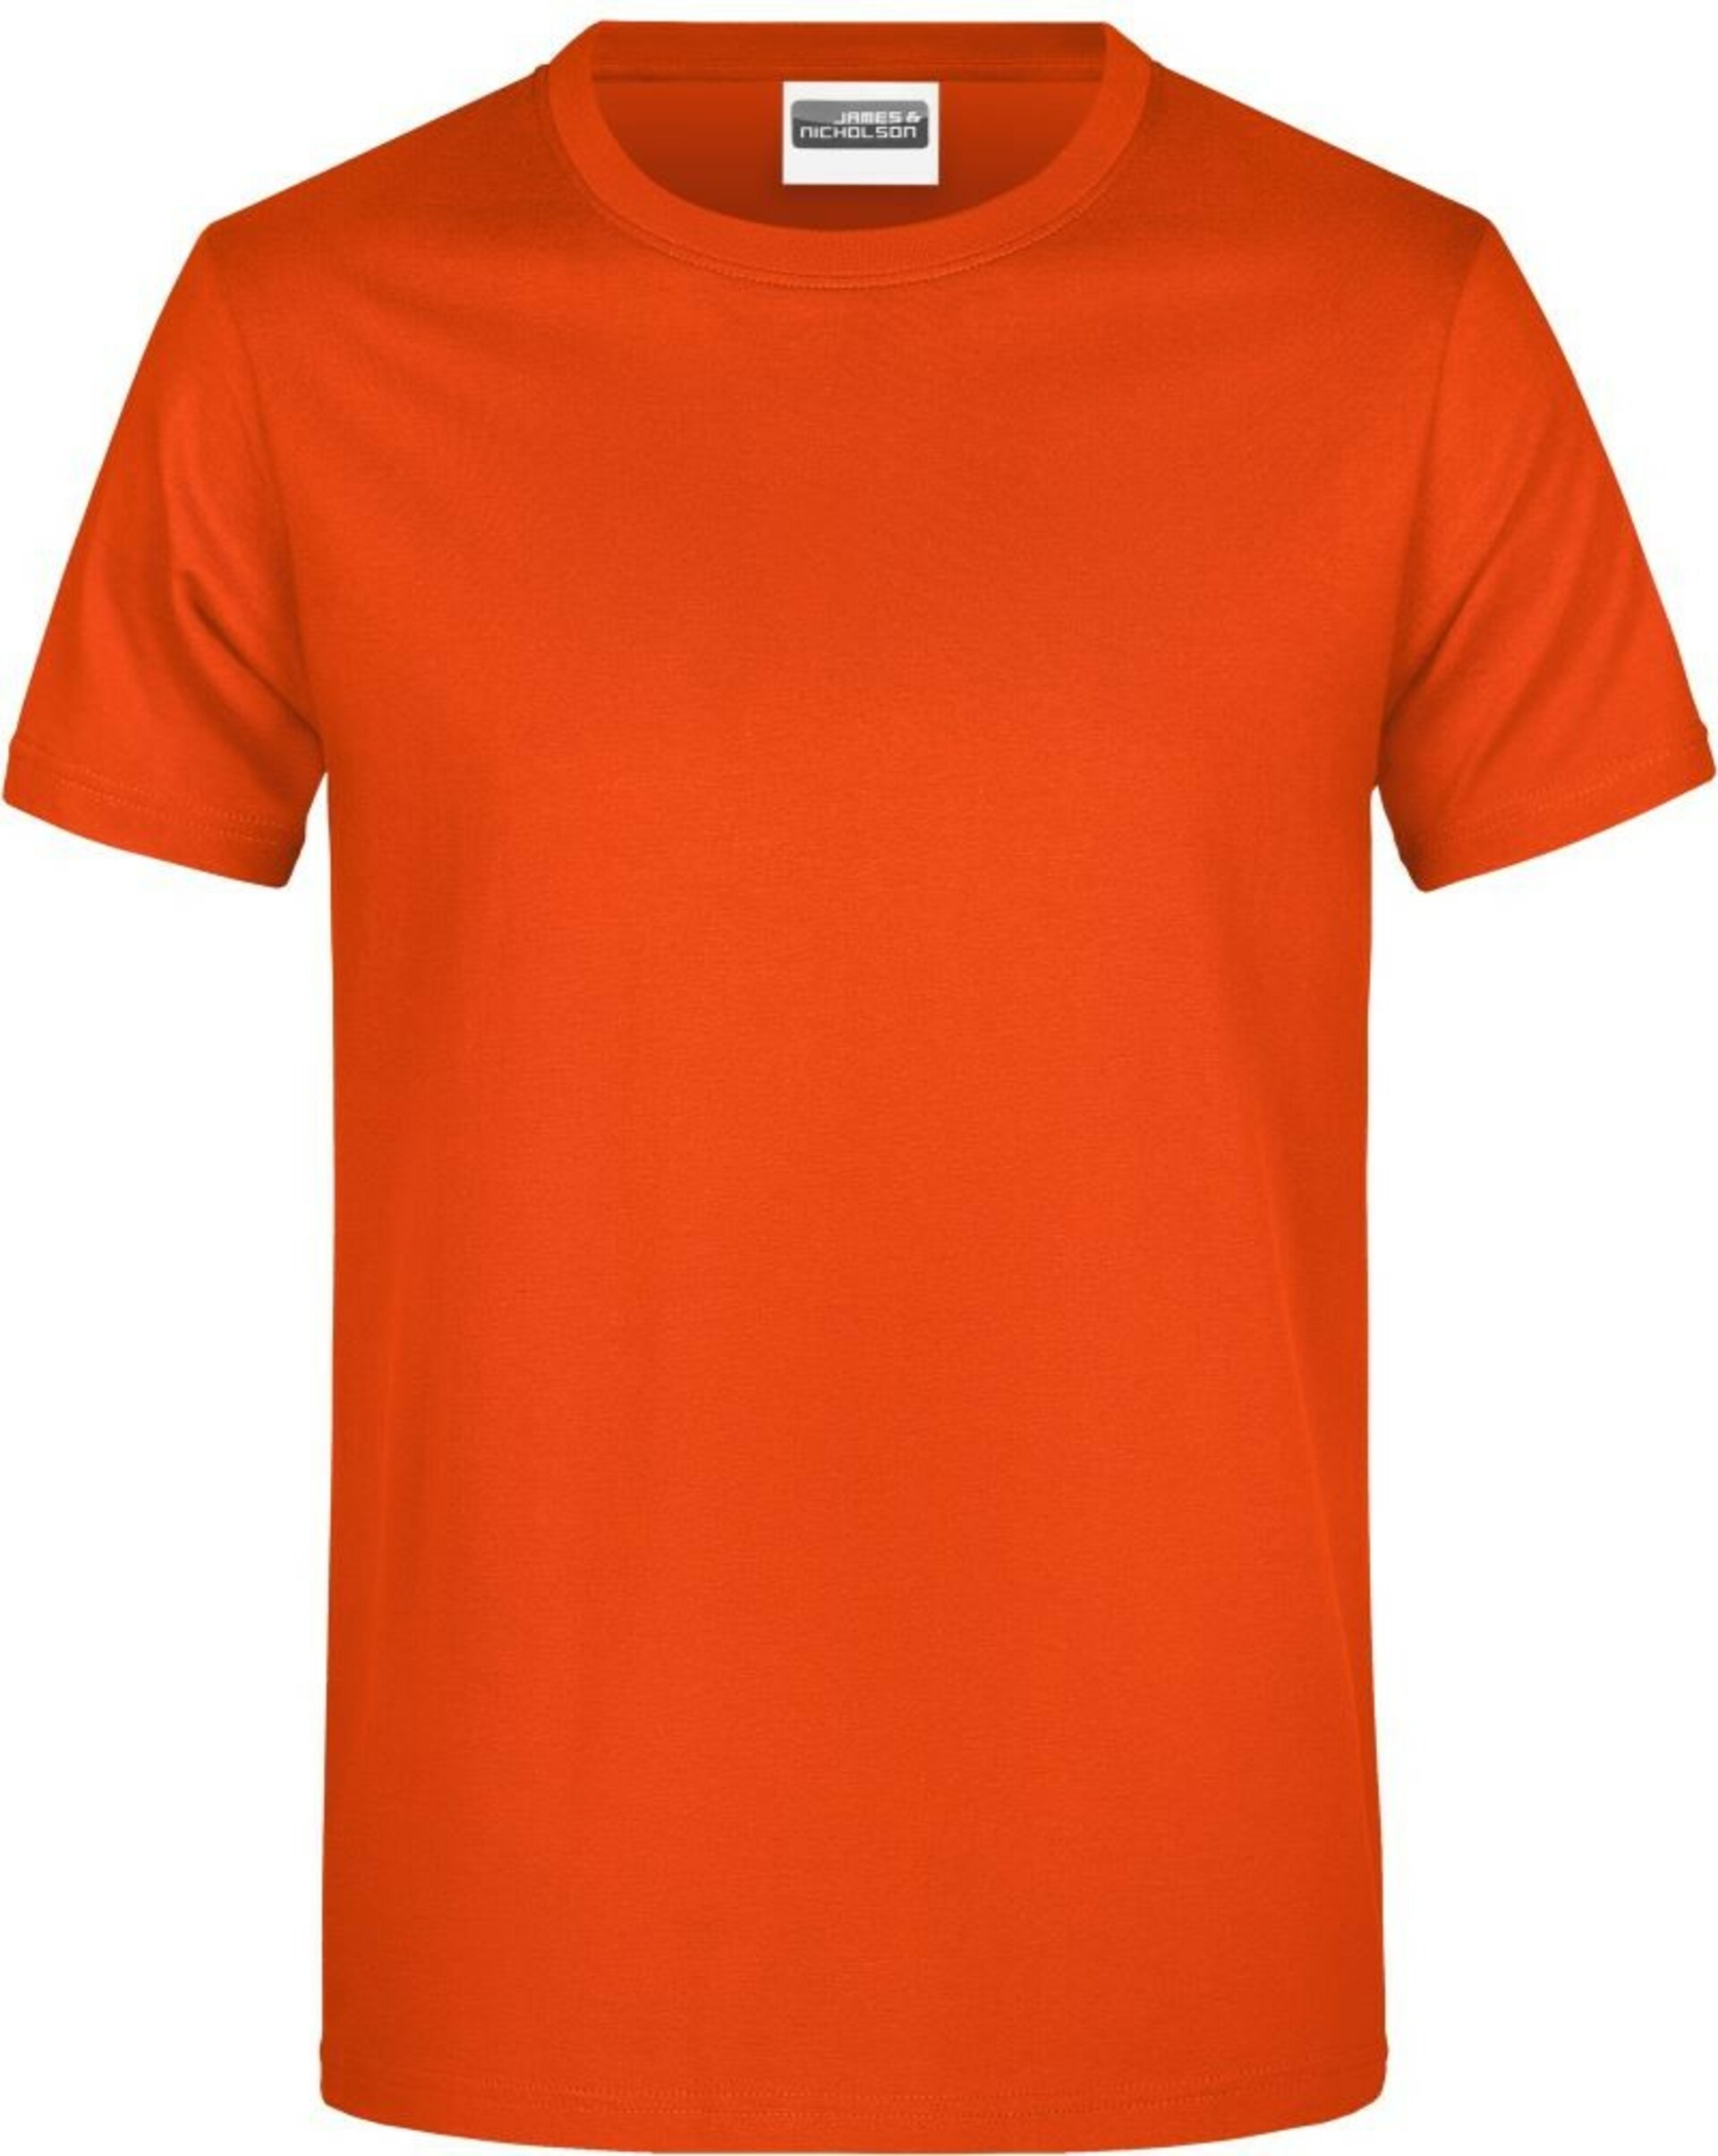 Tričko James & Nicholson 0790 pánské krátký rukáv oranžová  XXL